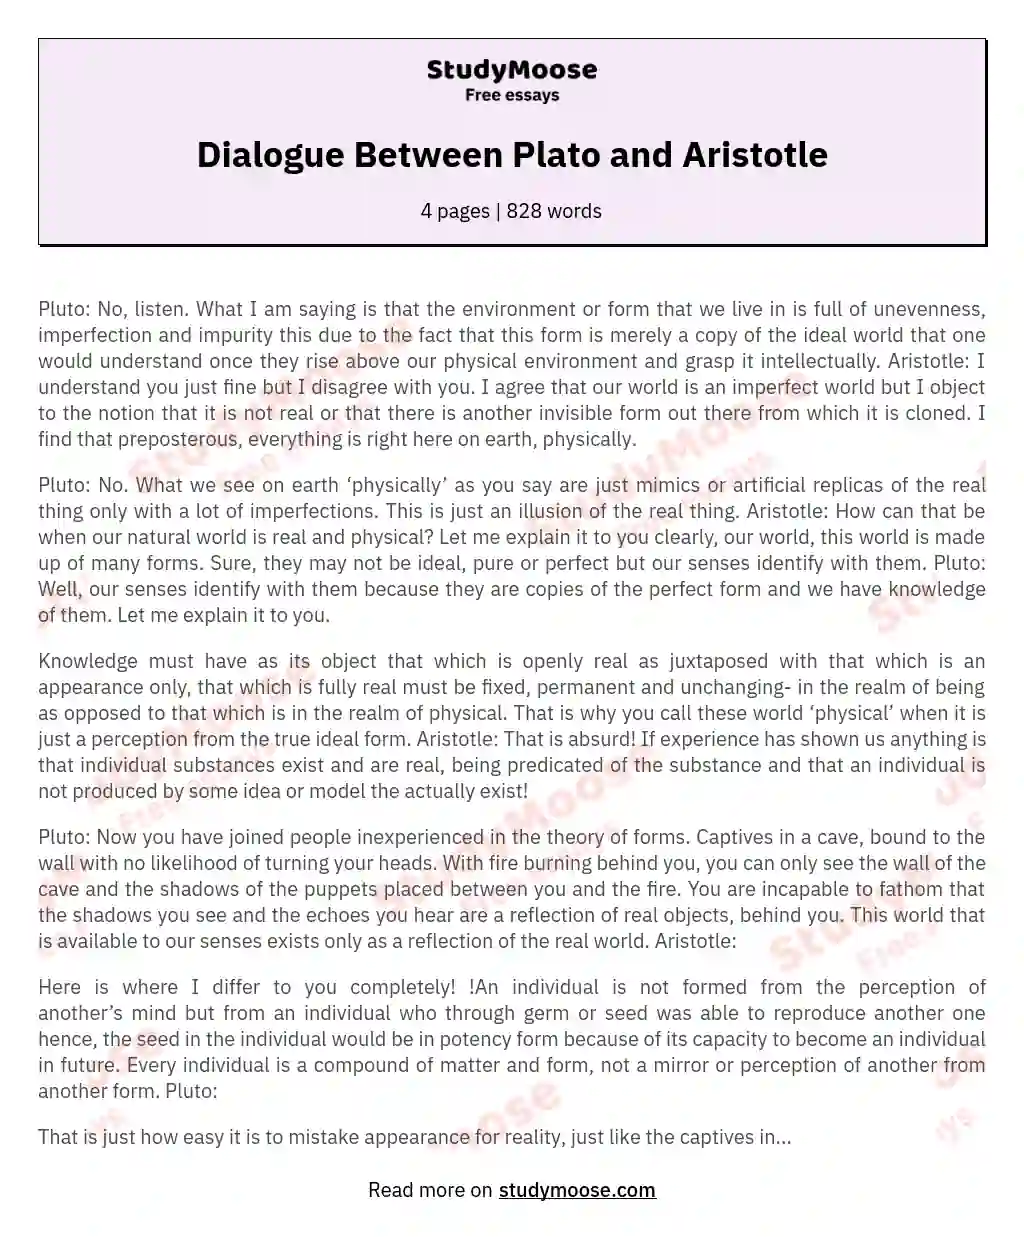 Dialogue Between Plato and Aristotle